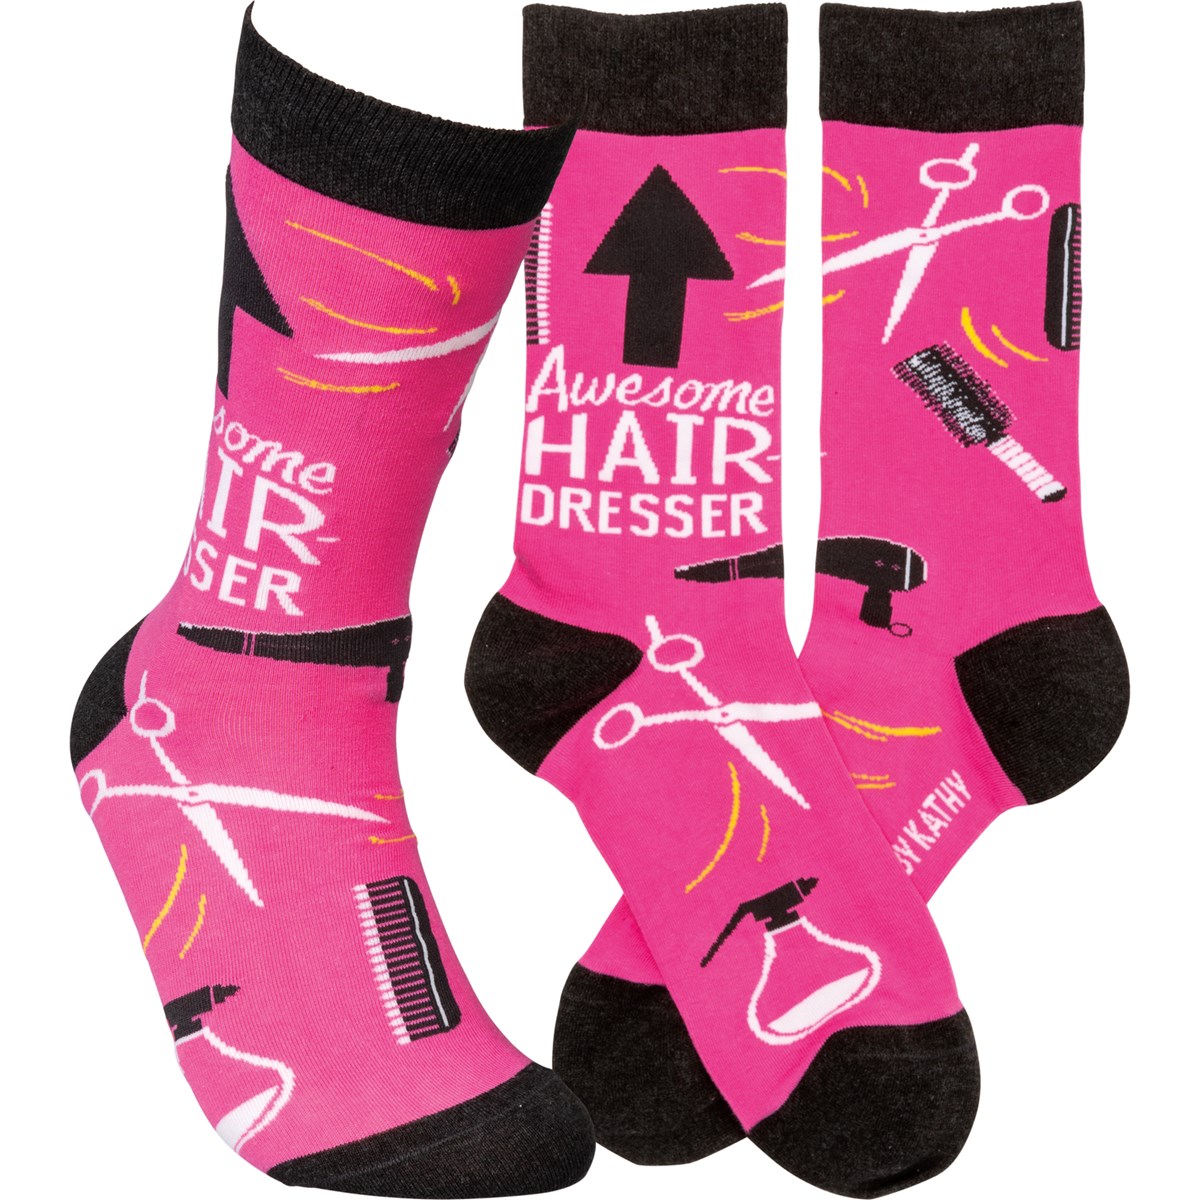 Awesome Hairdresser Socks - Cotton, Nylon, Spandex